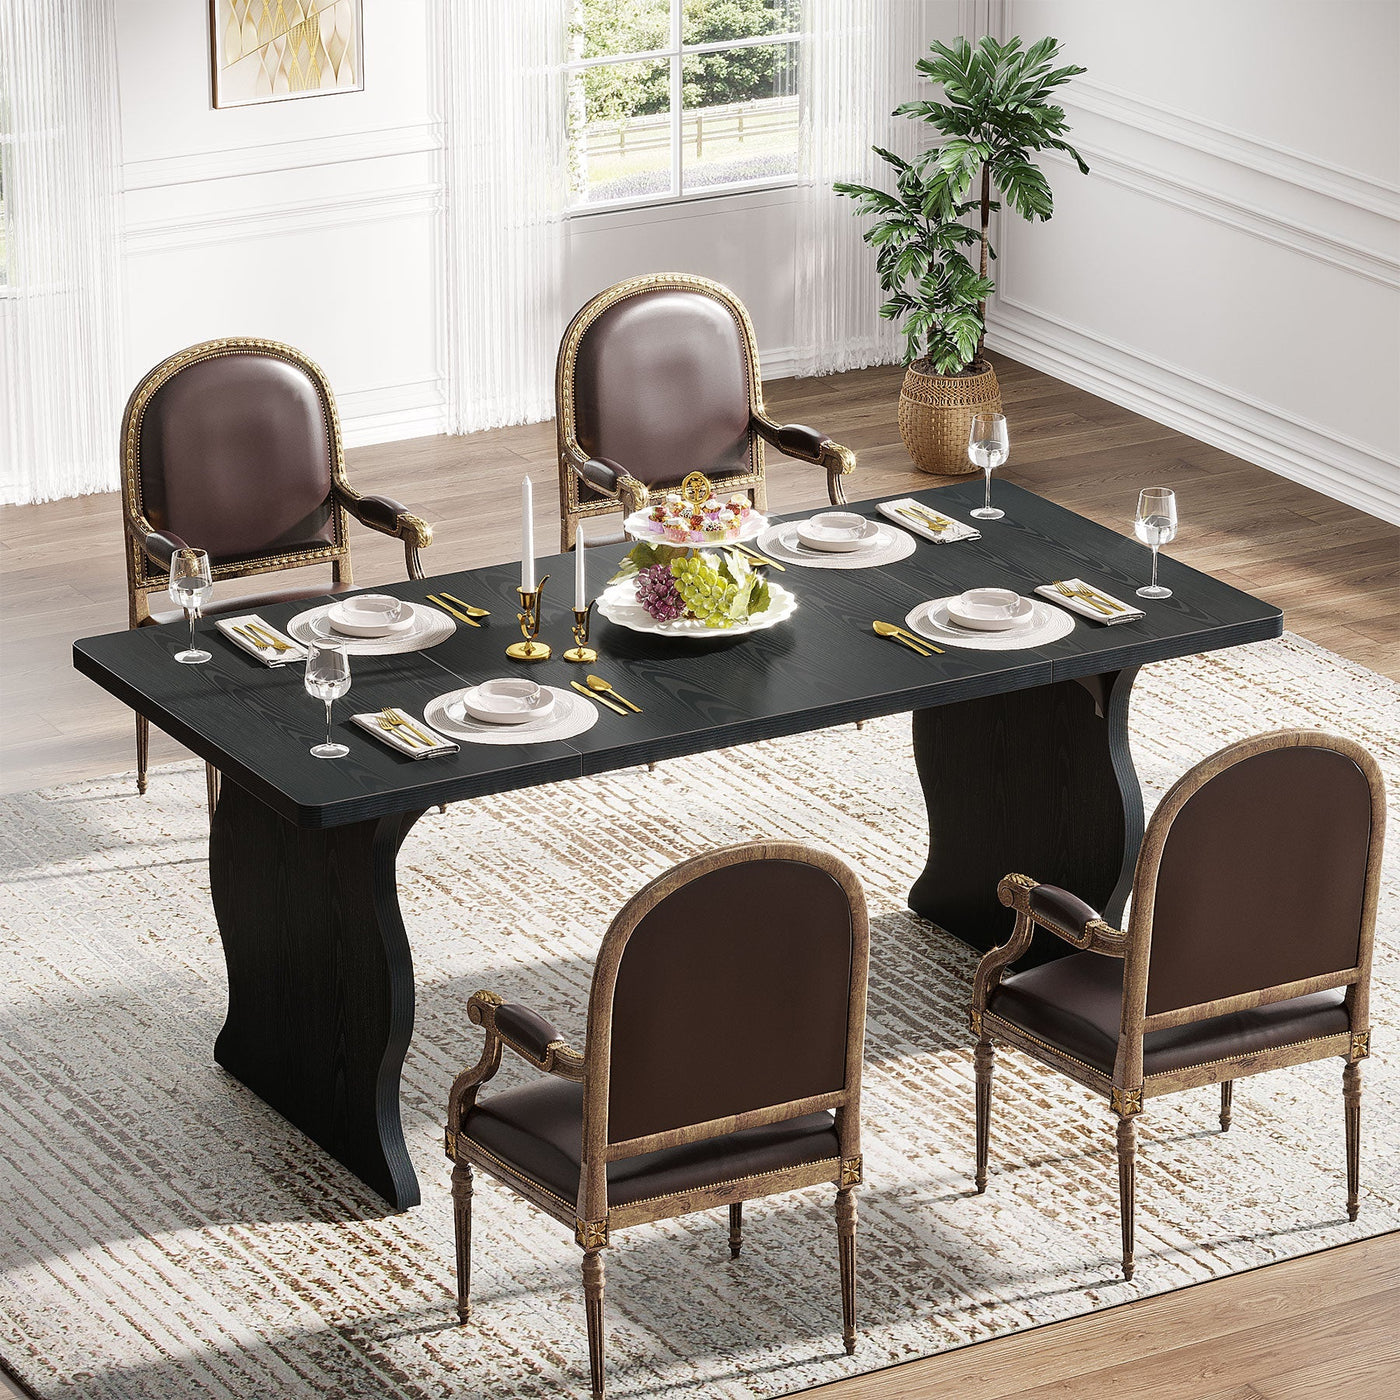 Highlight 63" Dining Table | Modern Black Wood Rectangular Kitchen Table for 4-6